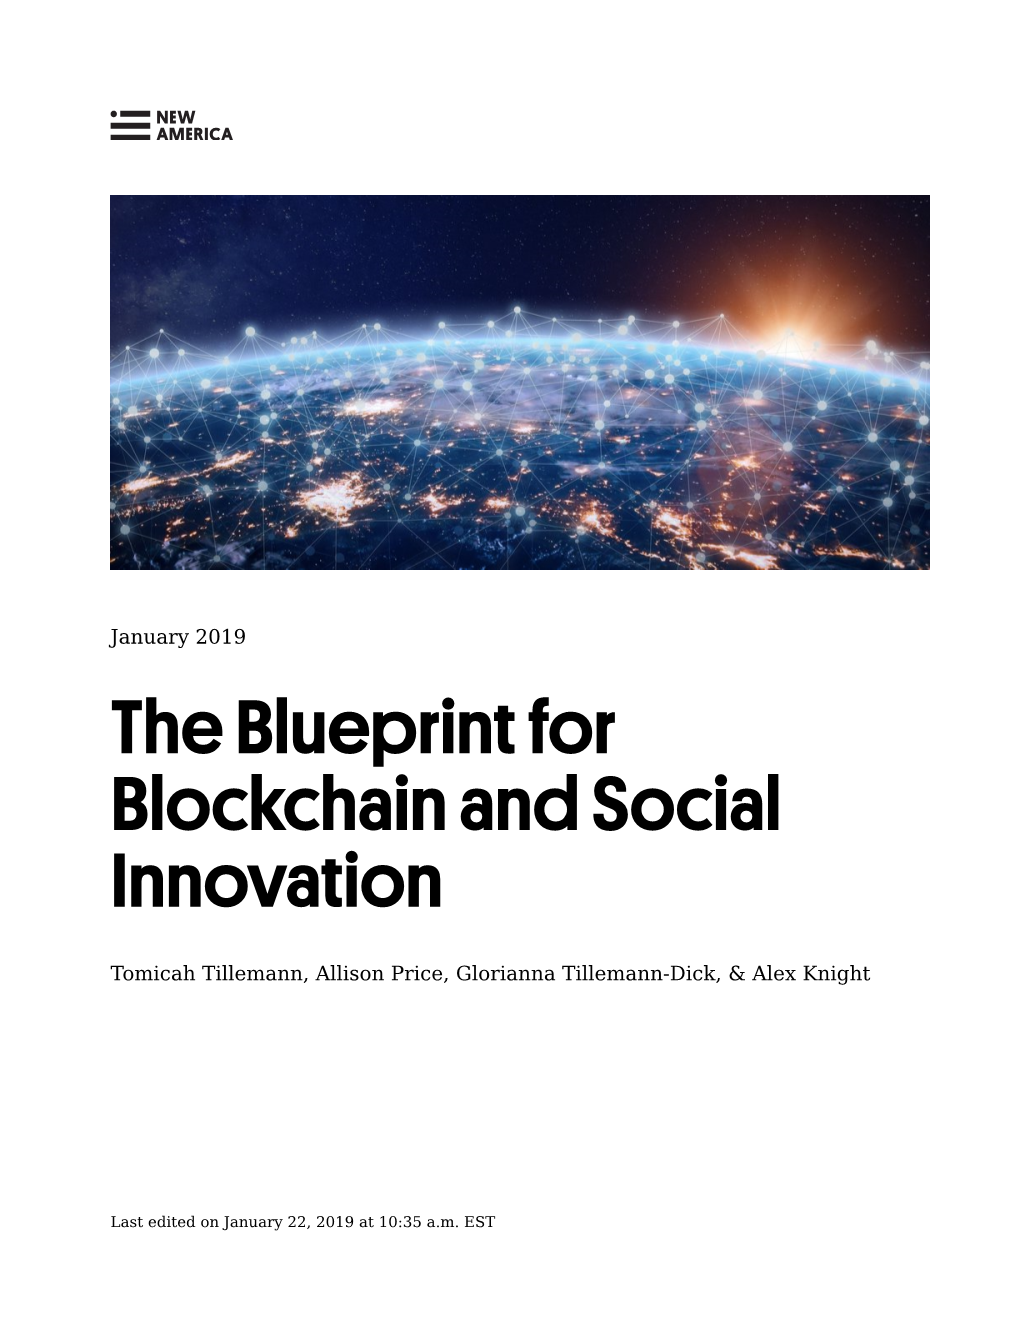 The Blueprint for Blockchain and Social Innovation